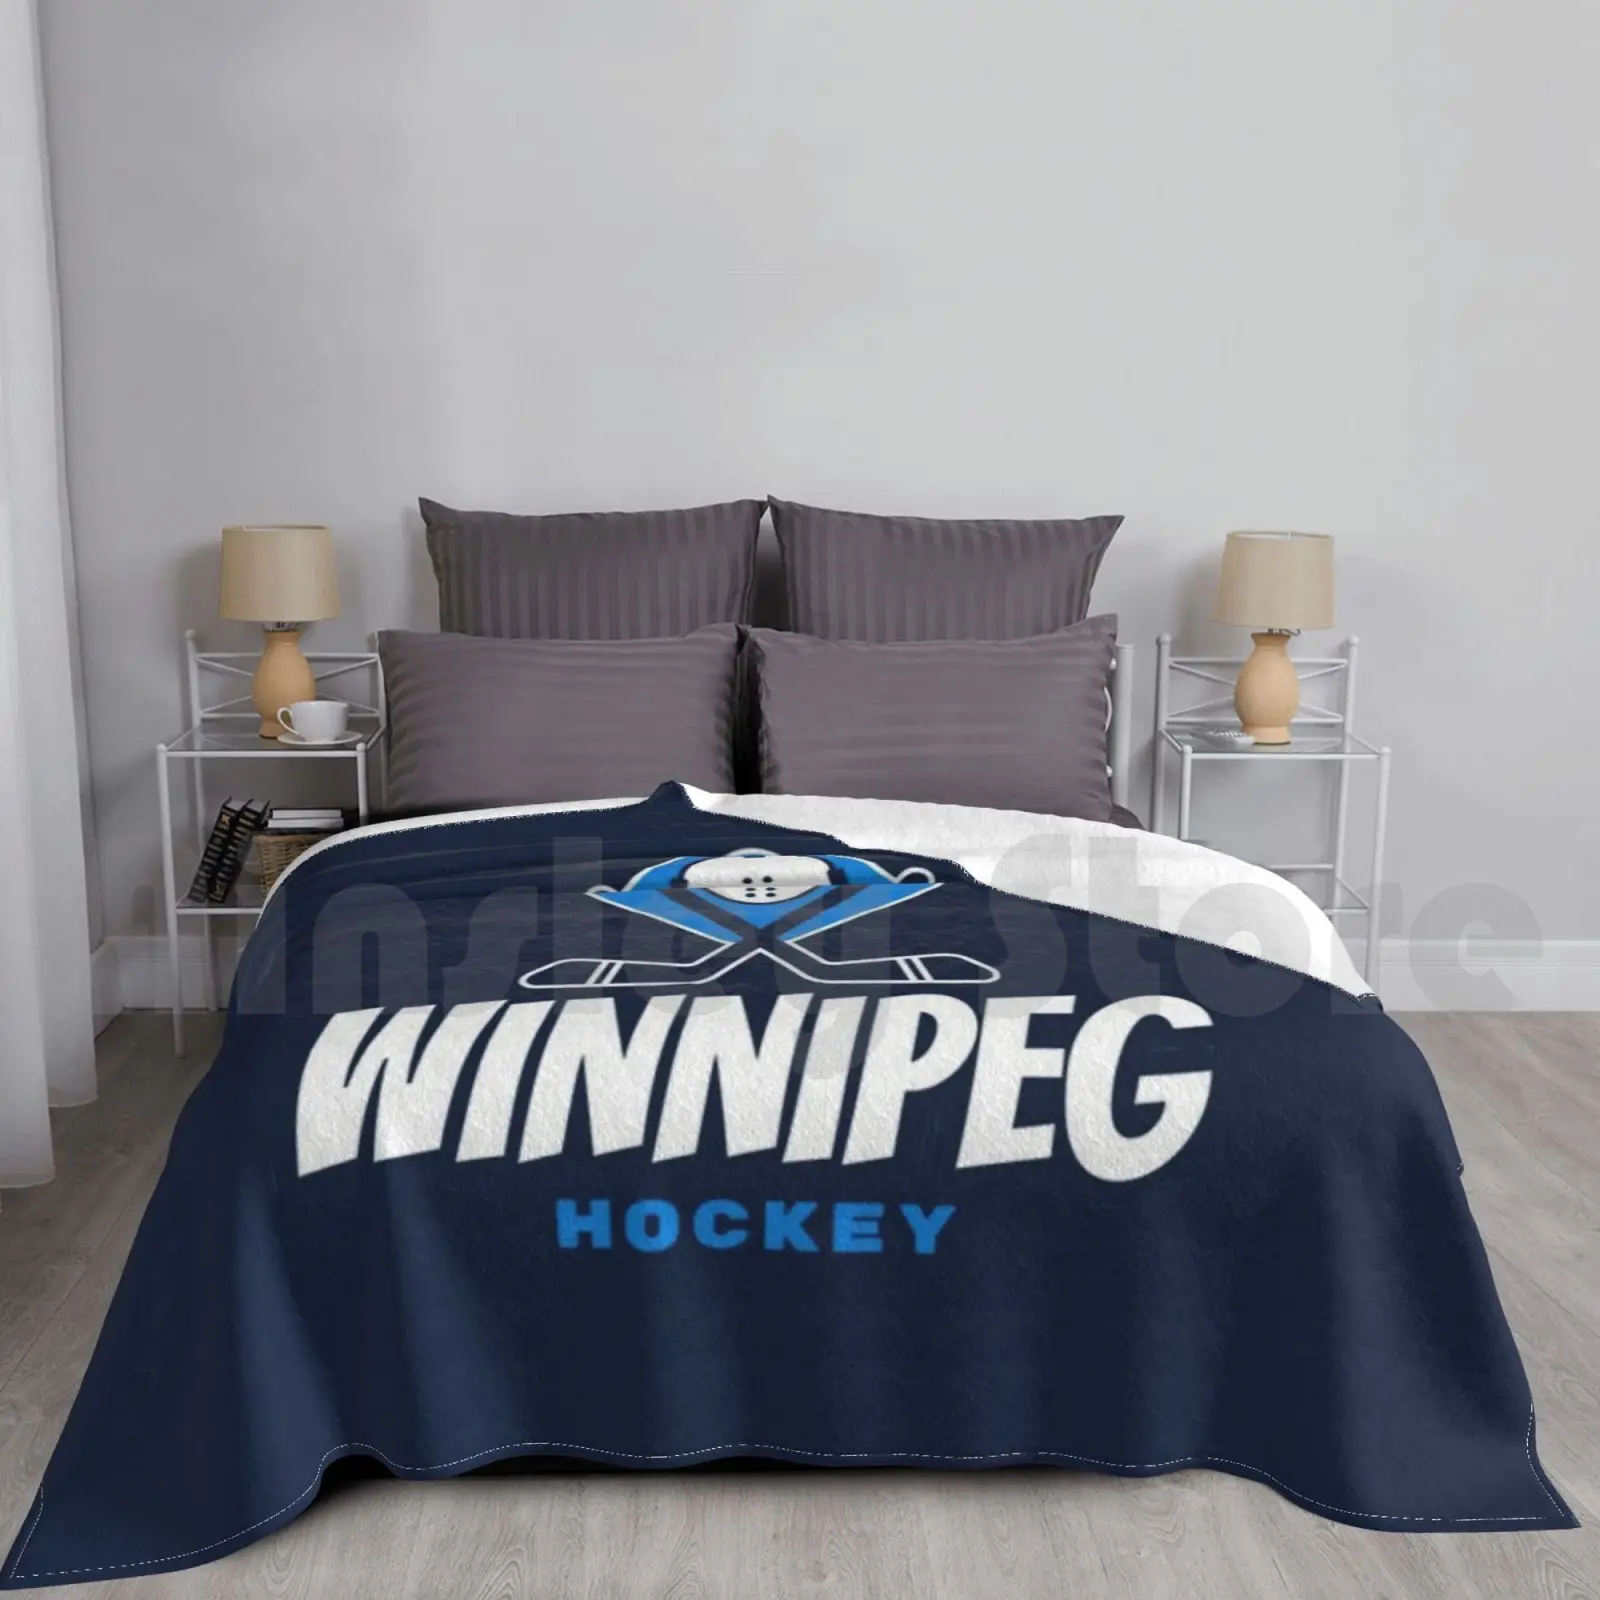 Хоккейное одеяло Fashion с нашивкой Winnipeg на льду и лого LNH Jets.